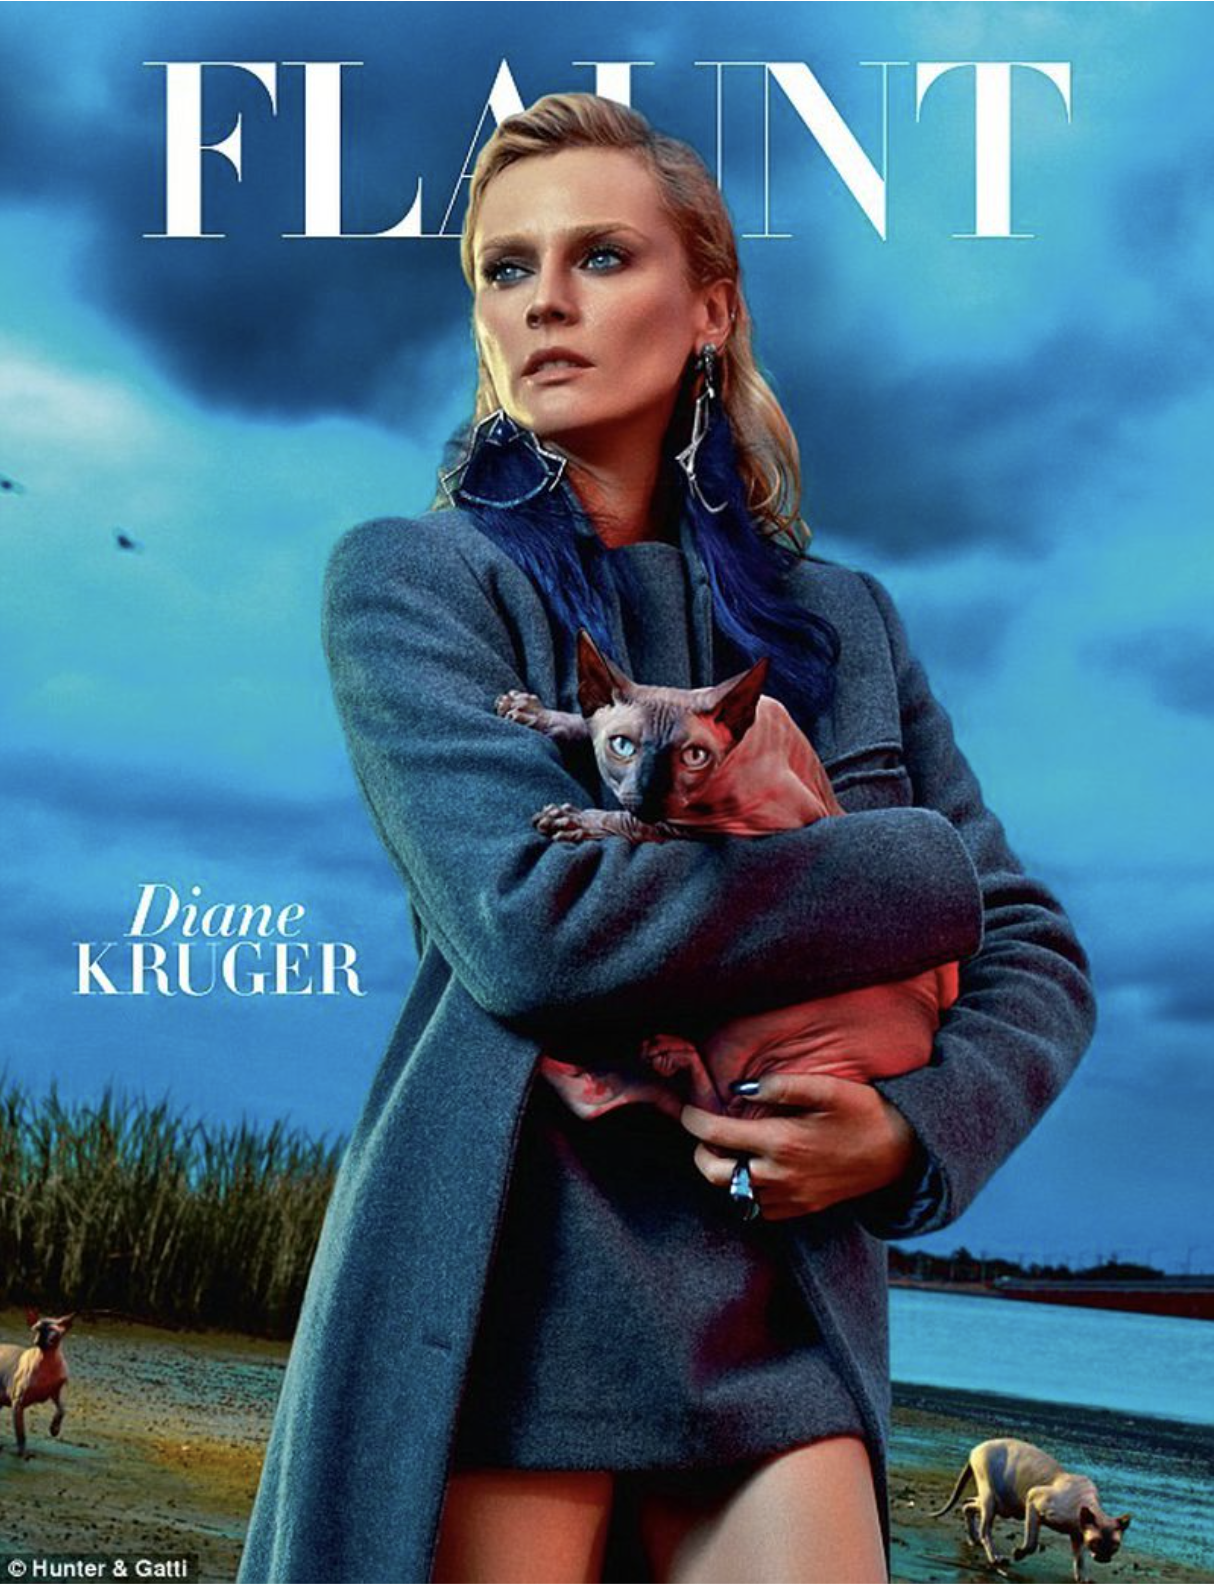 Diane-Kruger-by-Hunter-Gatti-Flaunt-Magazine-138-2014-2.png